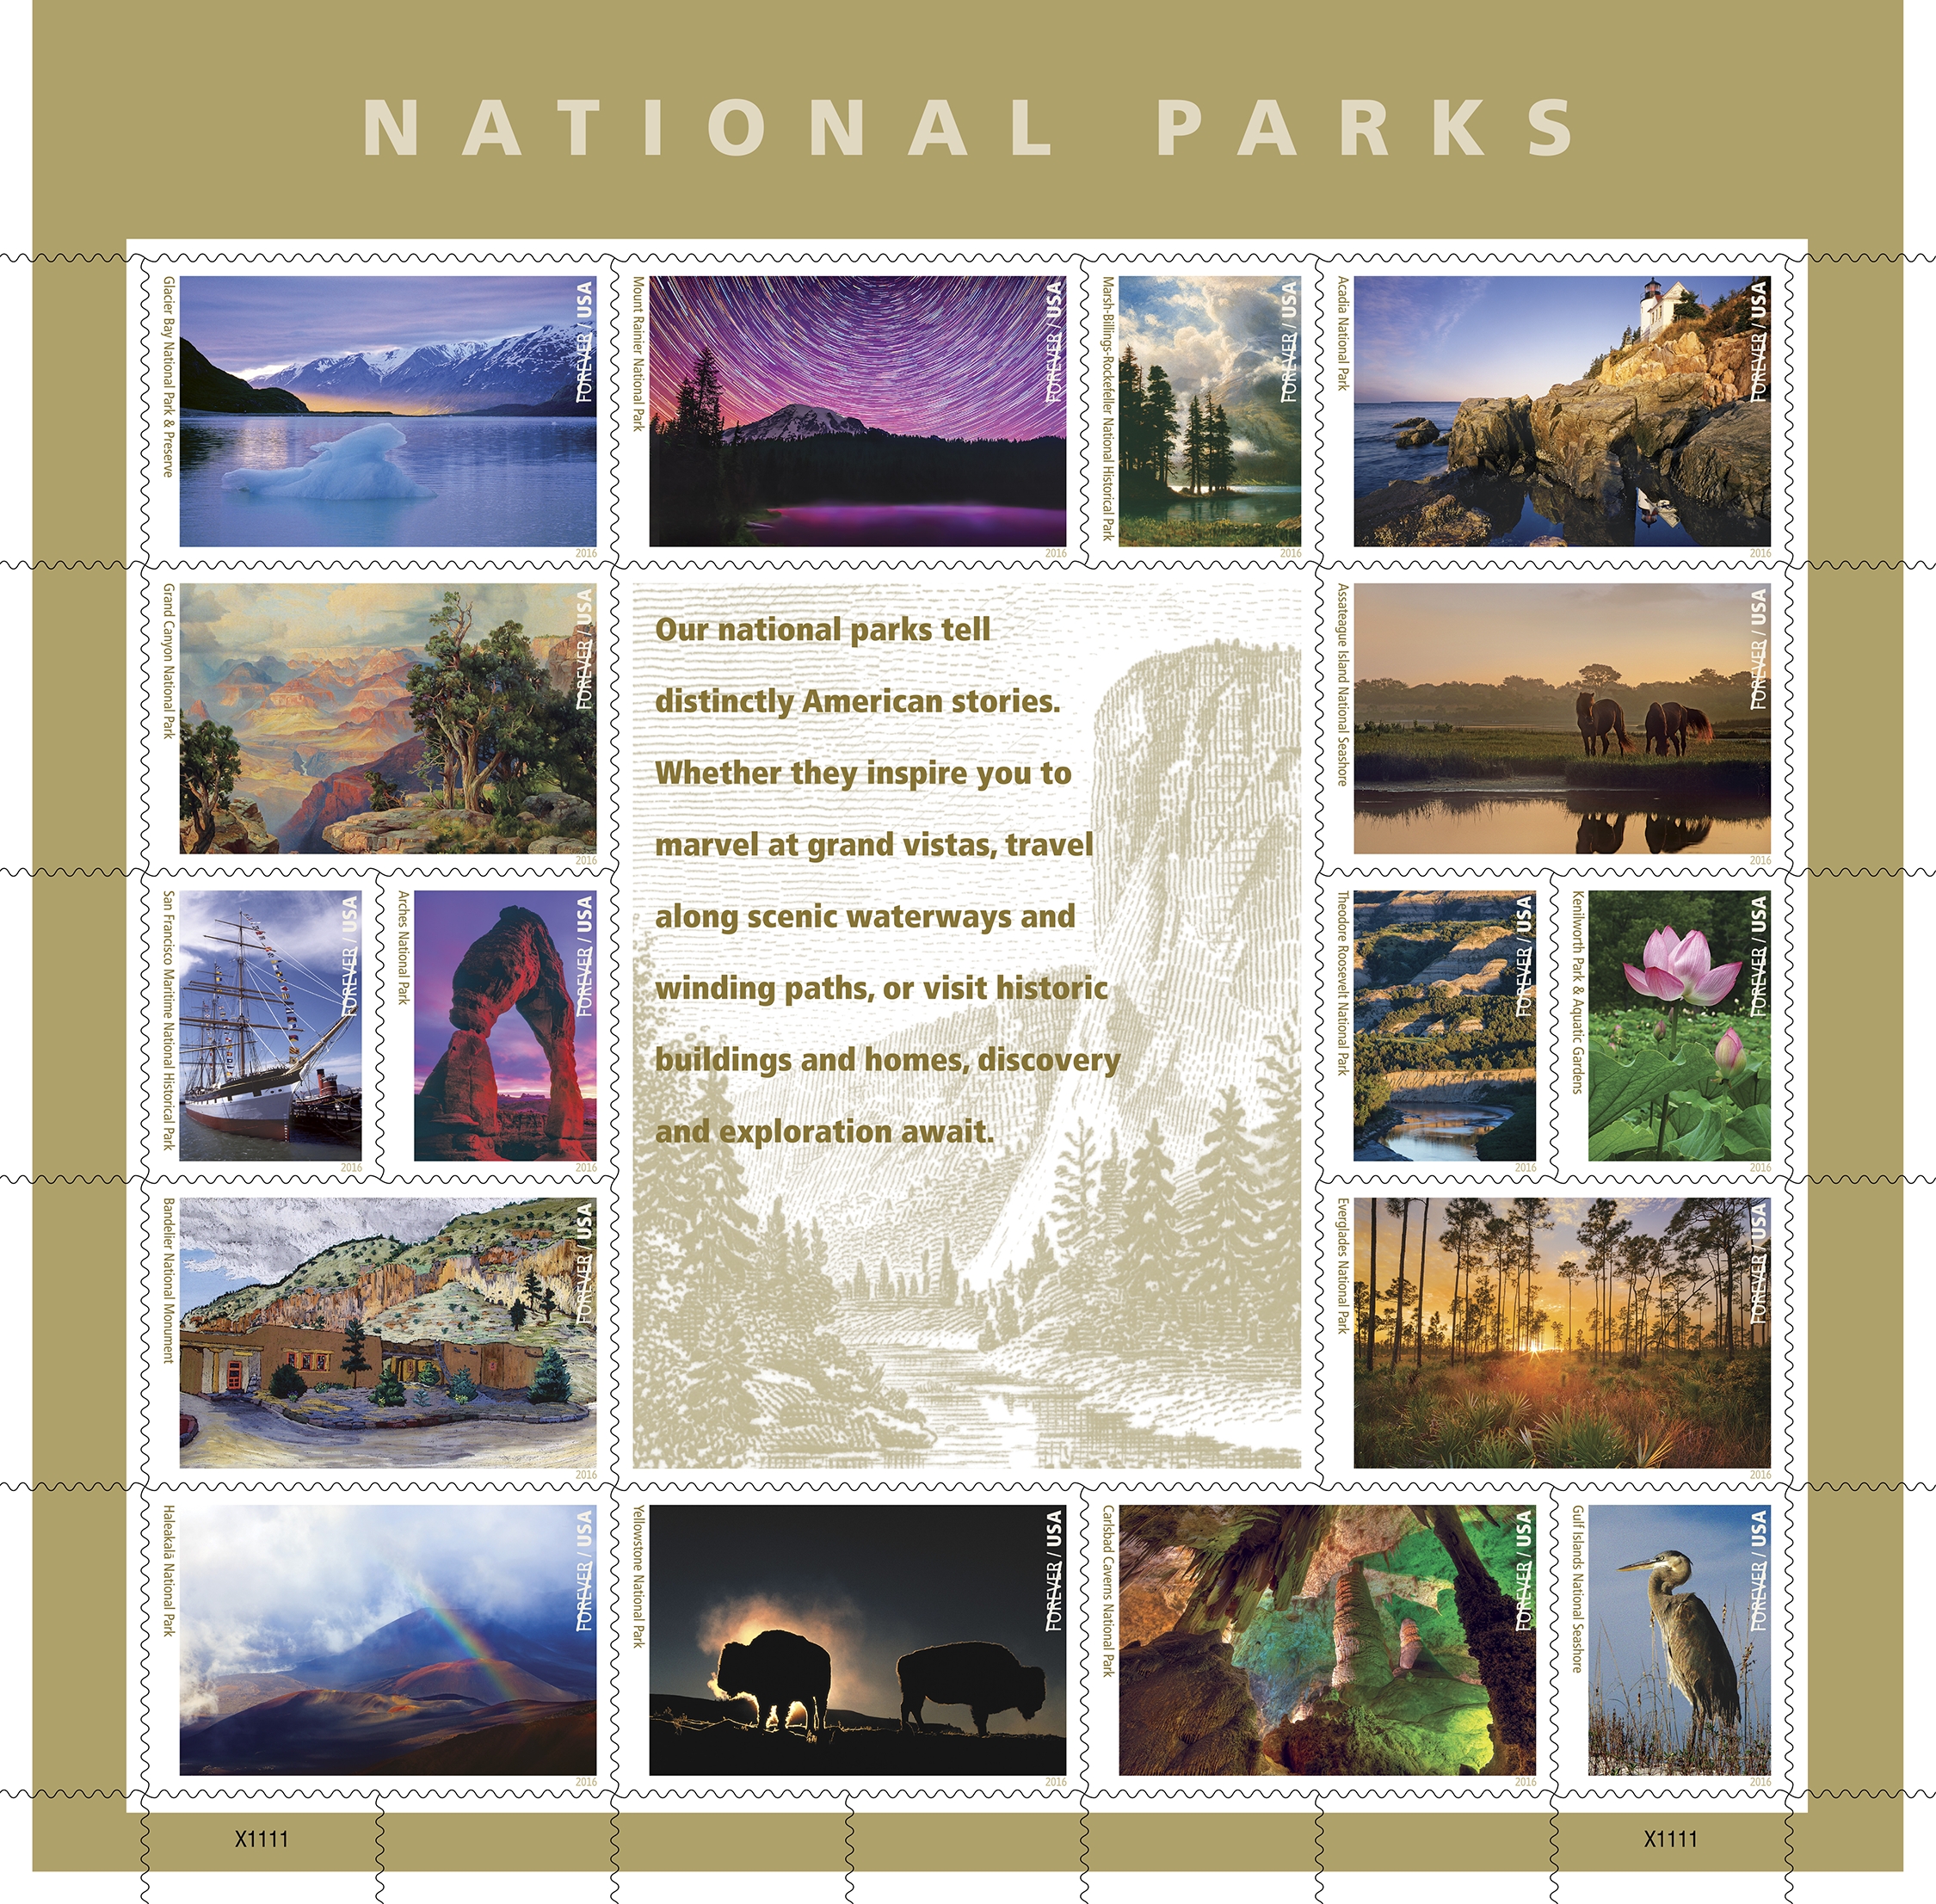 Theodore Roosevelt National Park stamp